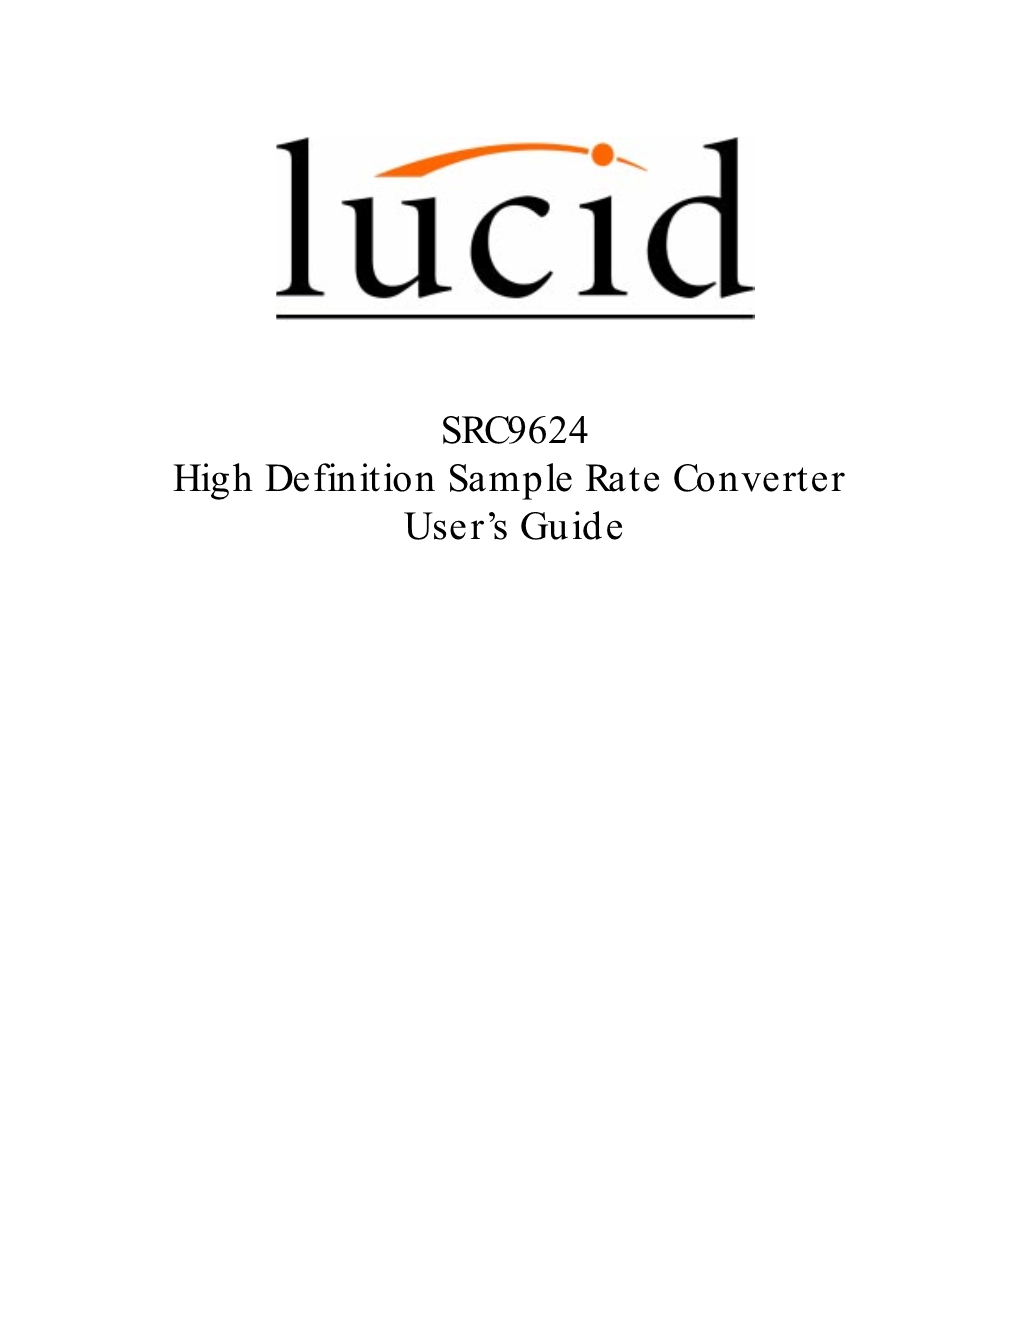 SRC9624 High Definition Sample Rate Converter User's Guide